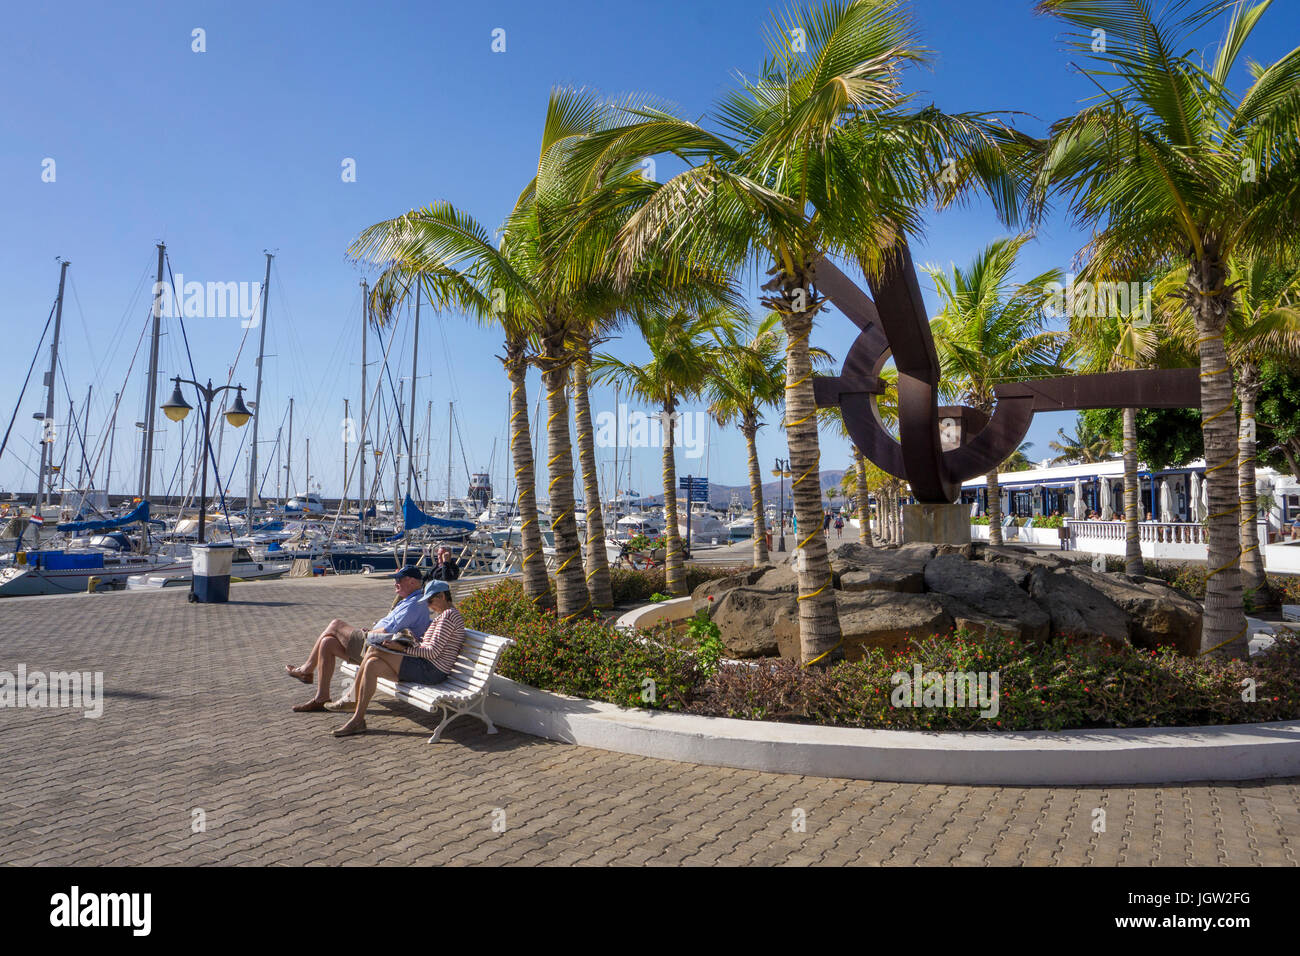 People at harbour promenade, Yacht harbour, Puerto Calero, Lanzarote island, Canary islands, Spain, Europe Stock Photo